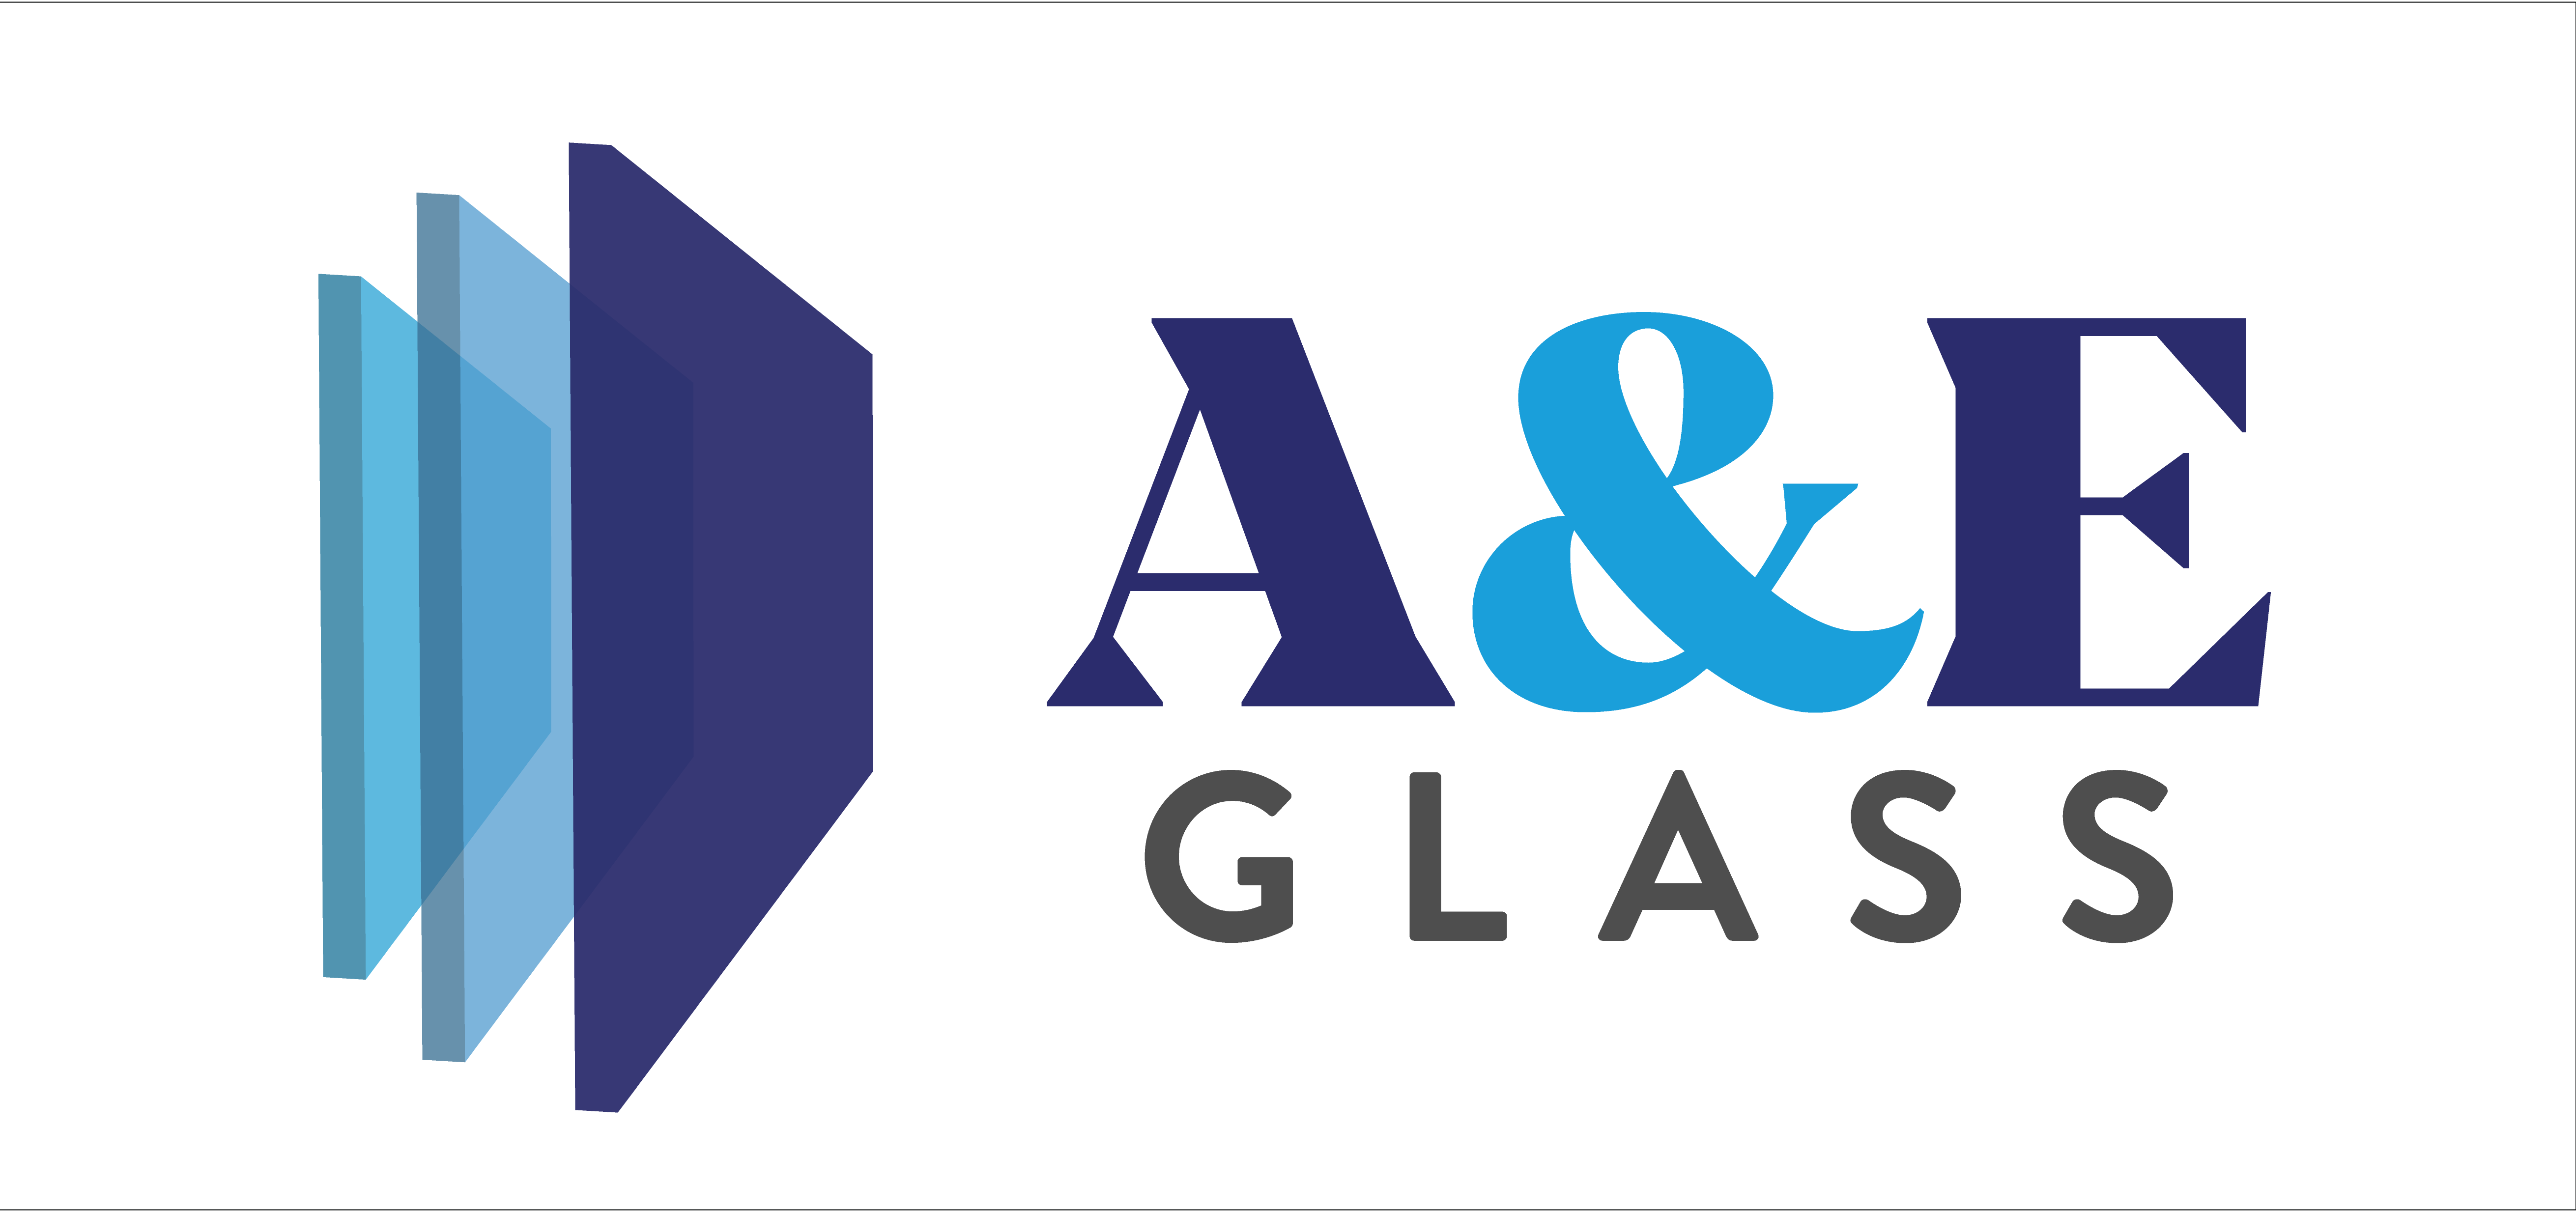 A&E Glass Logo